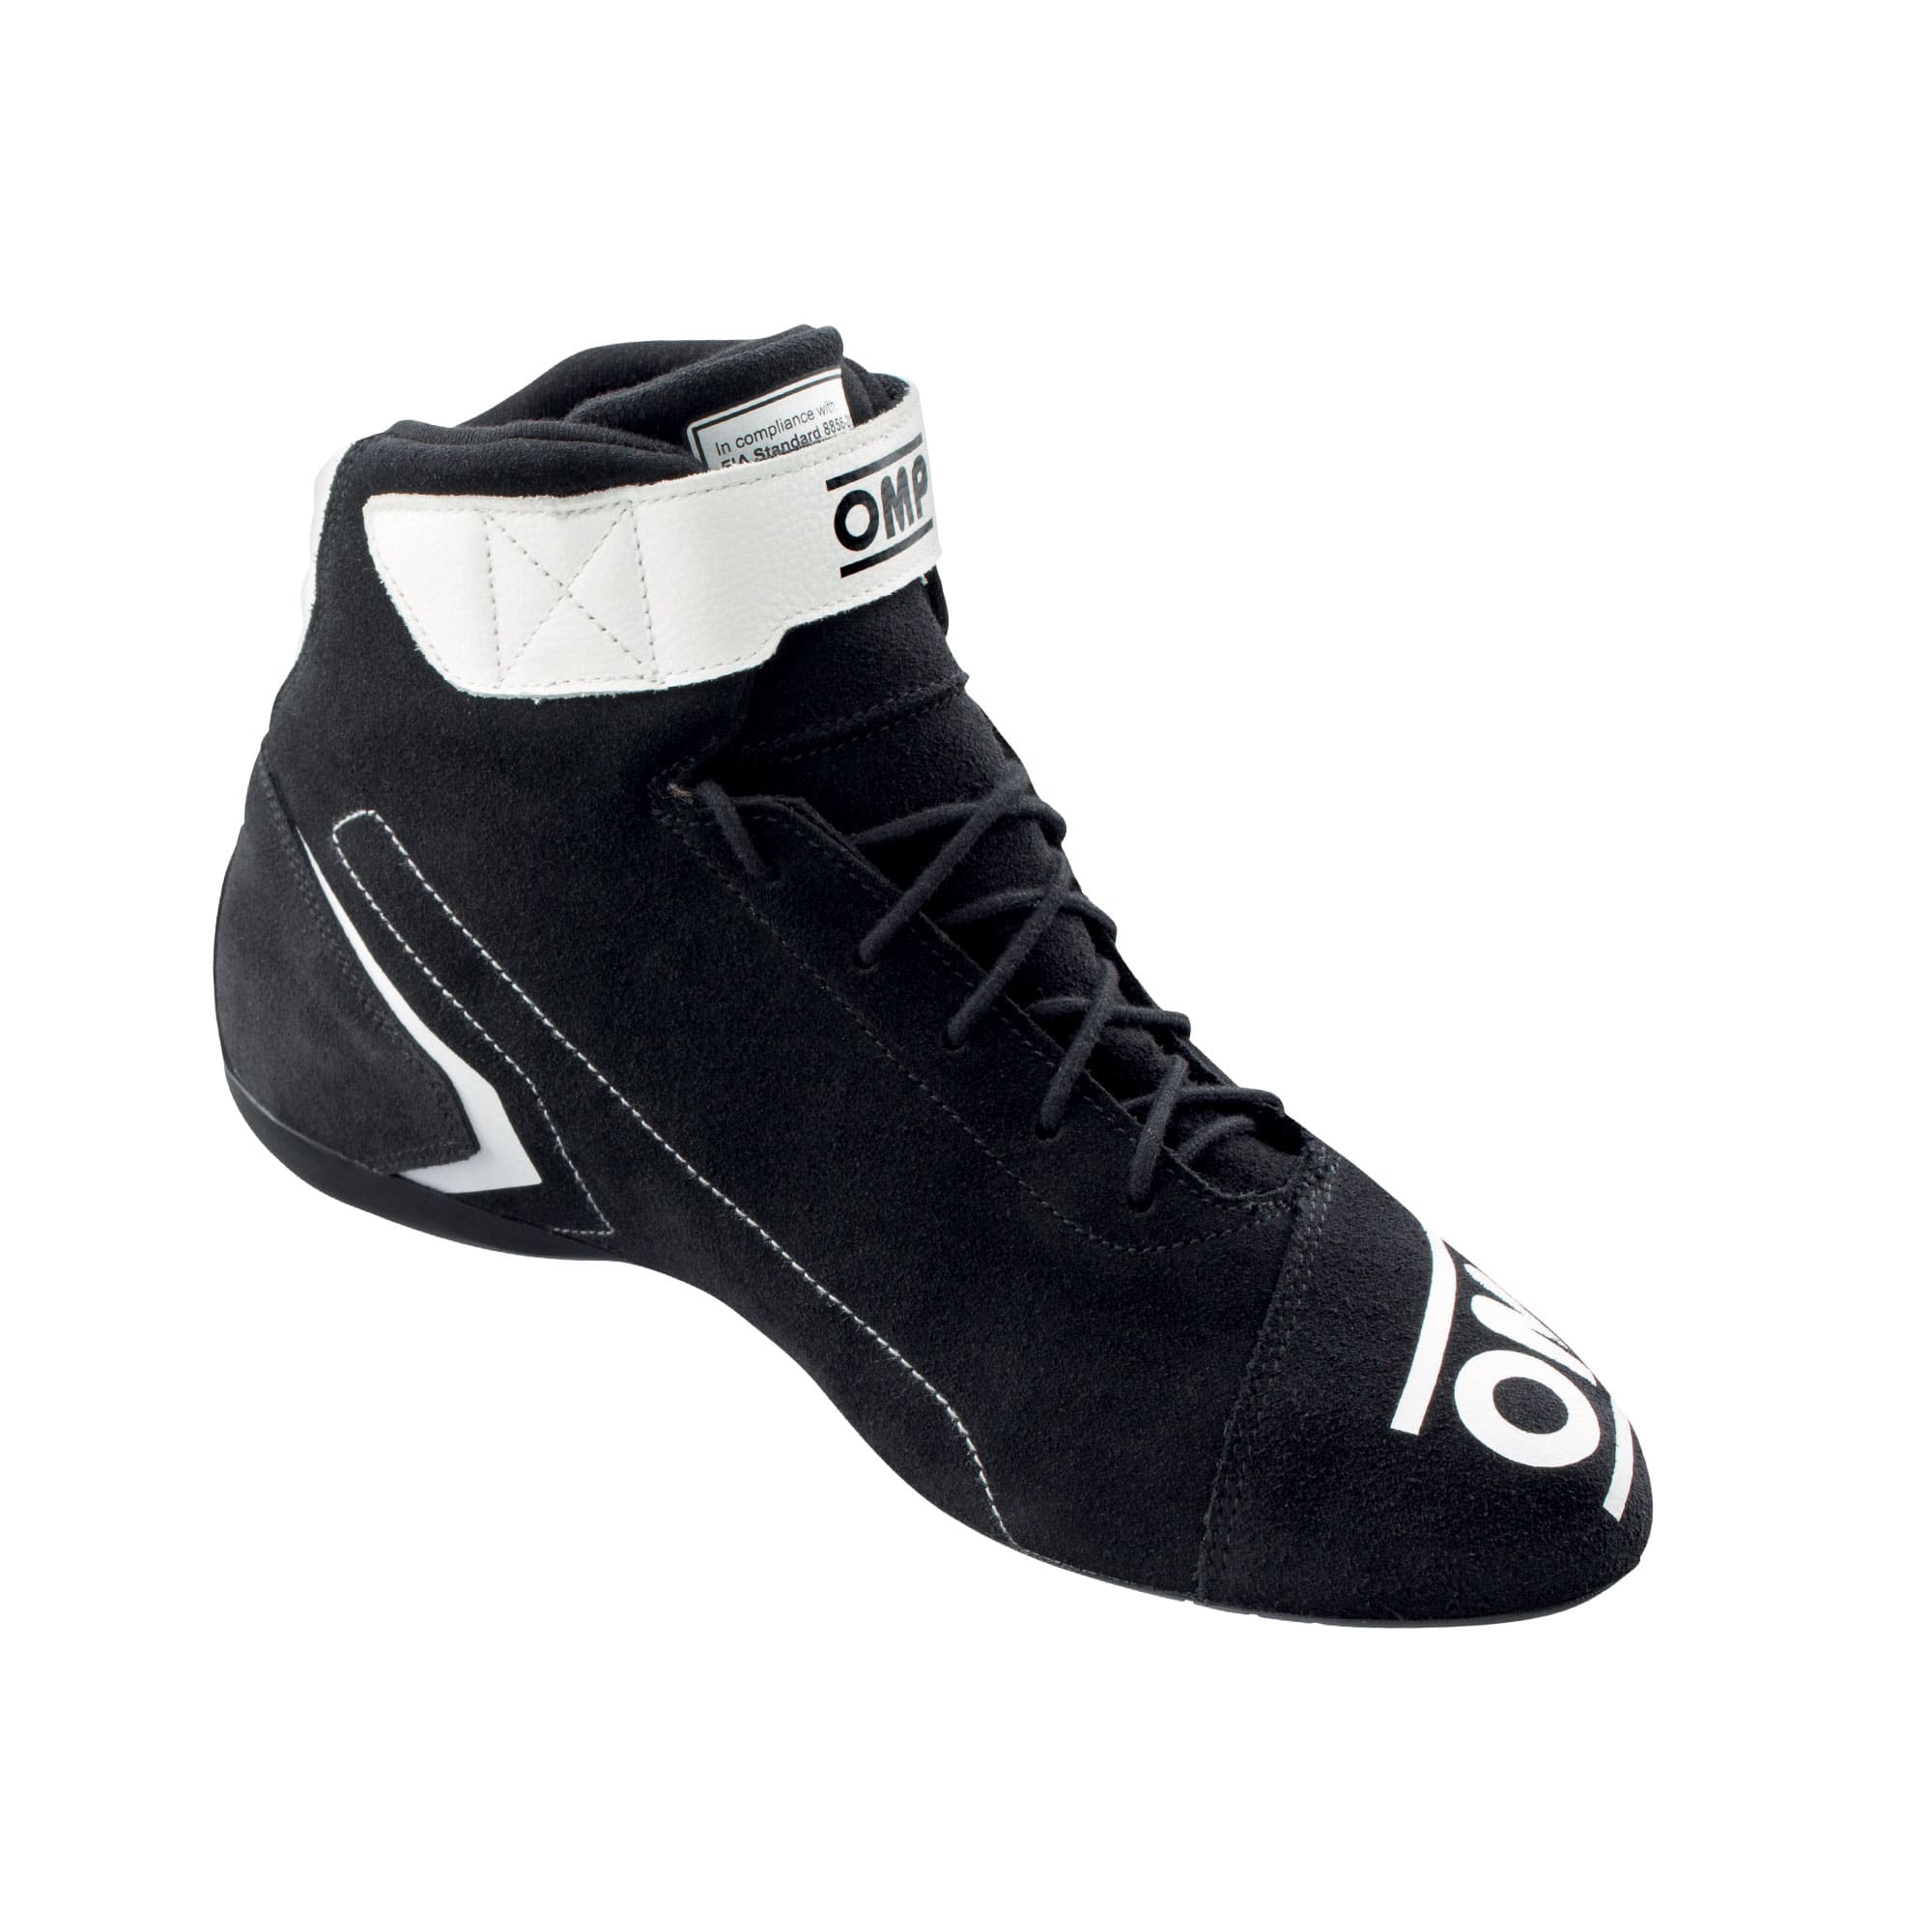 Scarpe-First-Shoes-Omp-Nero-Bianco-IC-824071-2